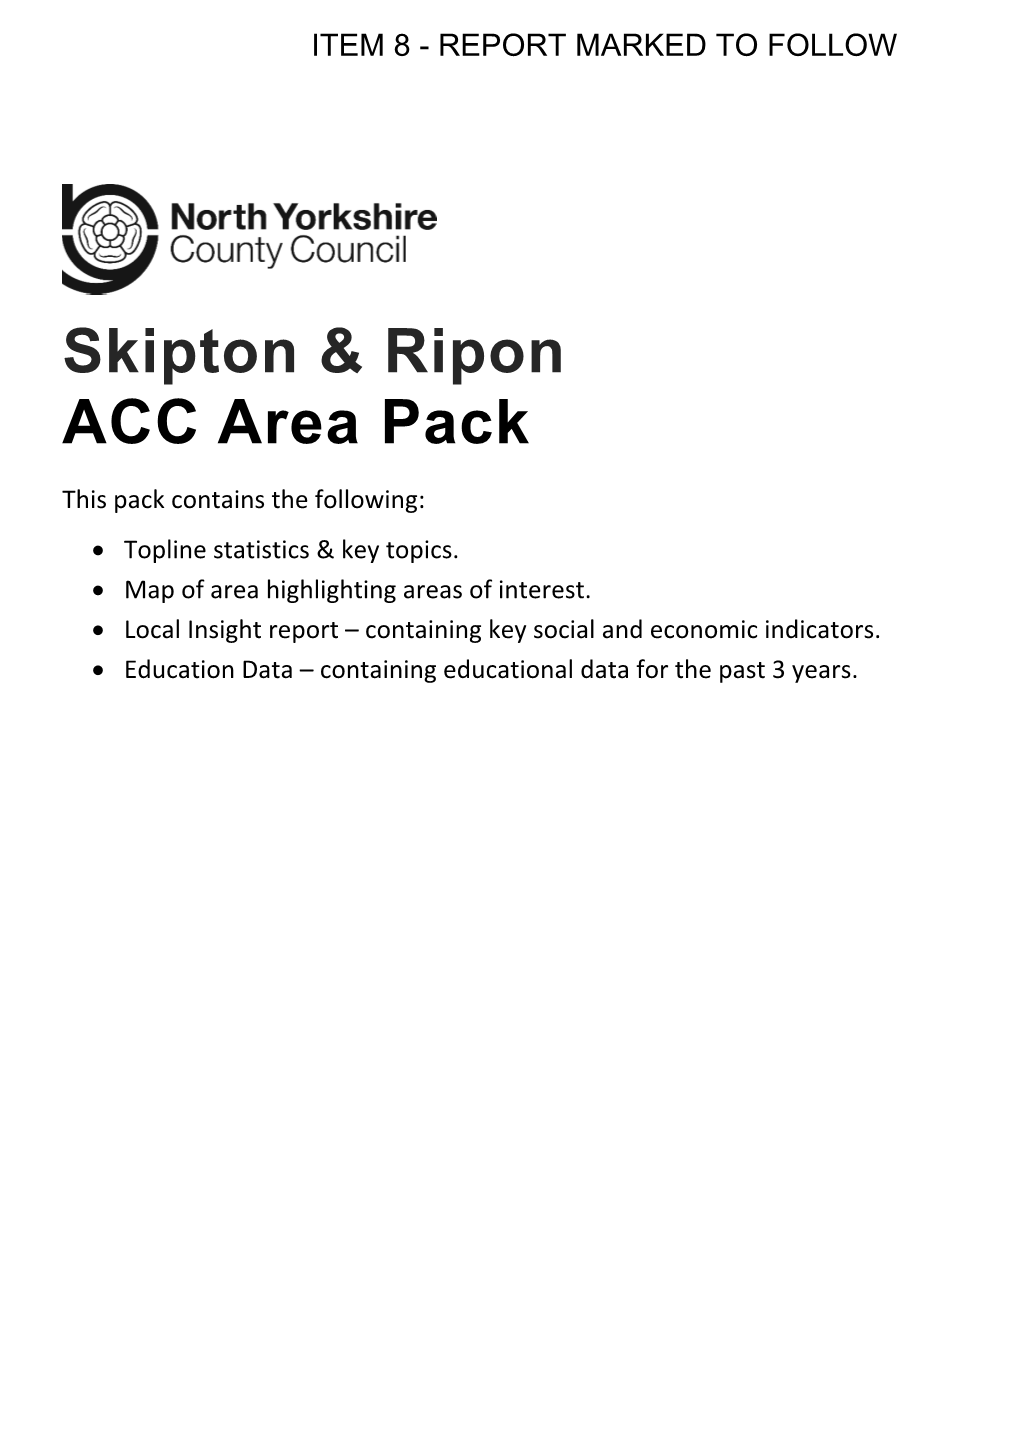 Skipton & Ripon ACC Area Pack